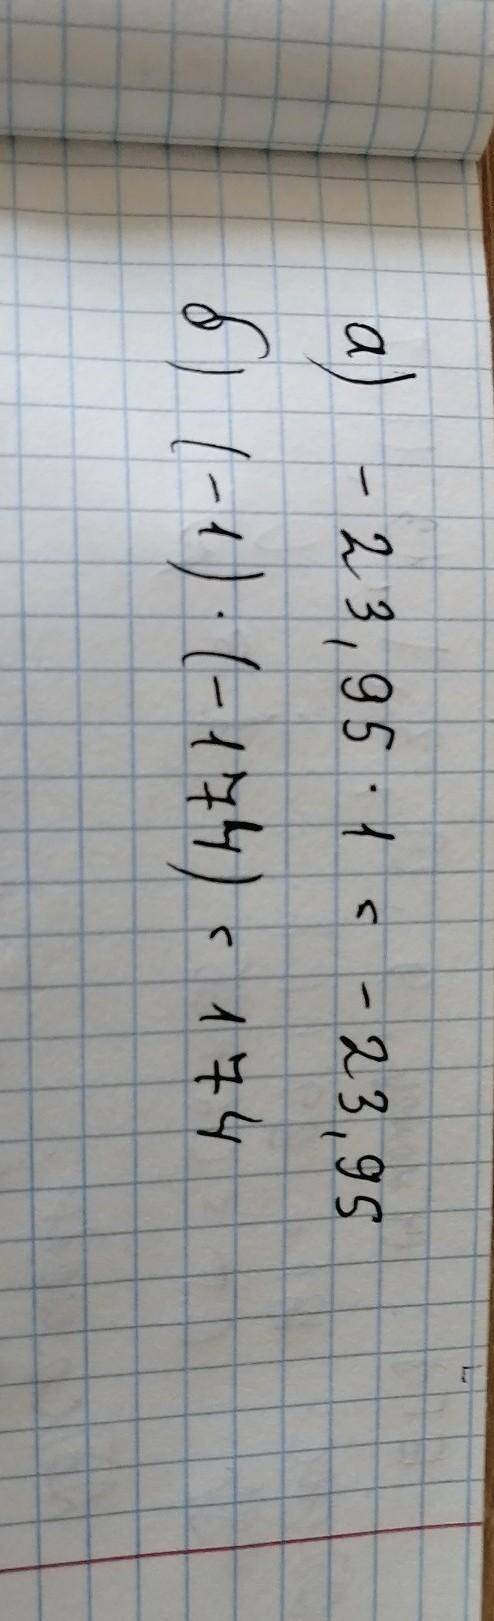 Выполни умножение: а) −23,95⋅1= б) (−1)⋅(−174)=